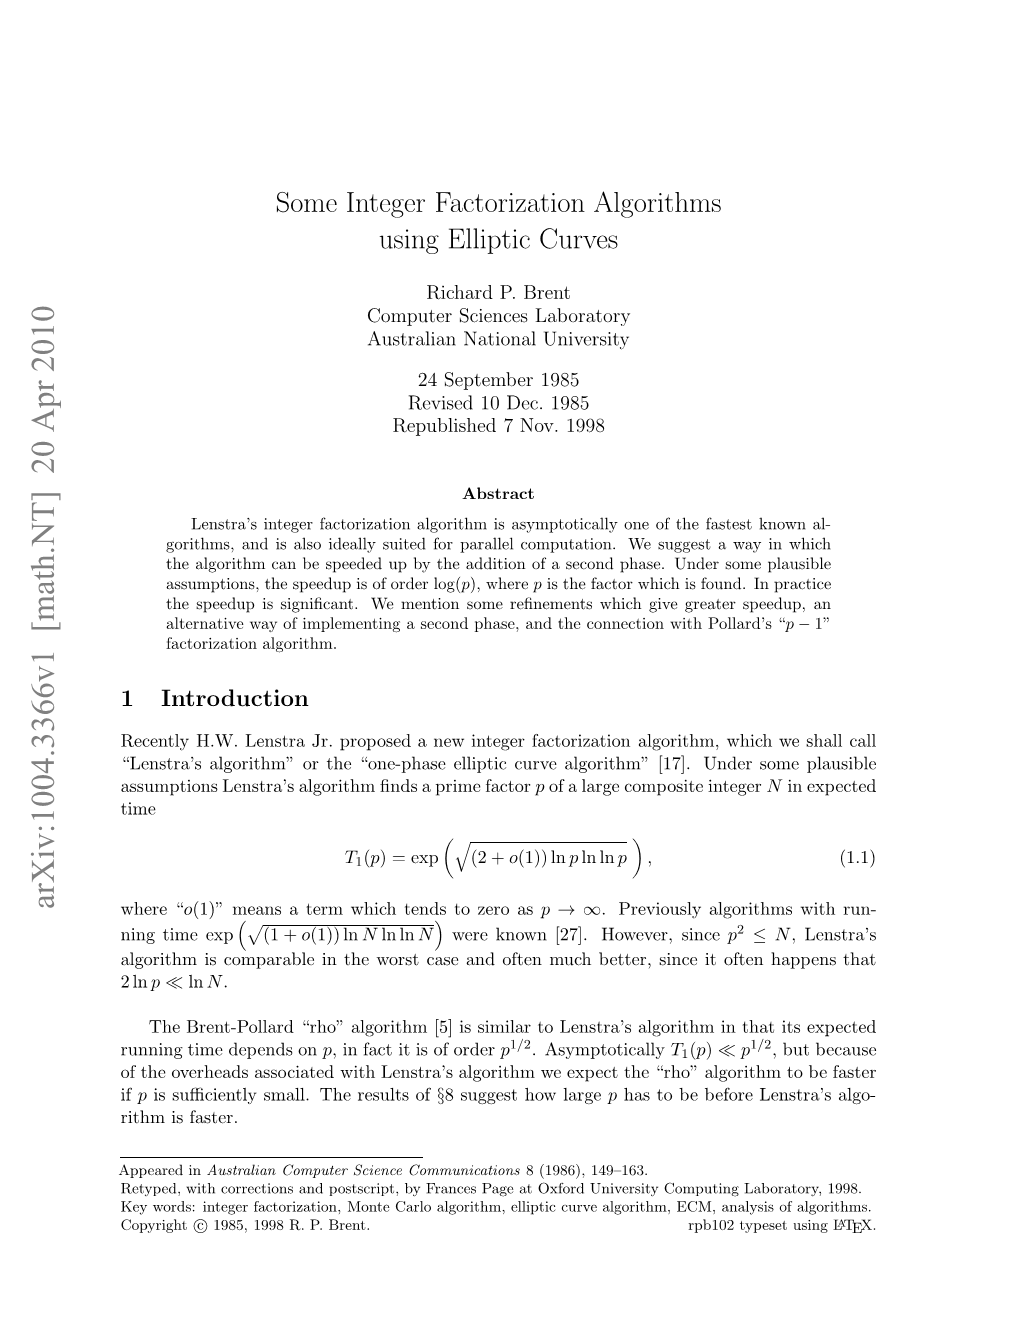 Some Integer Factorization Algorithms Using Elliptic Curves, Report CMA- R32-85, Centre for Math